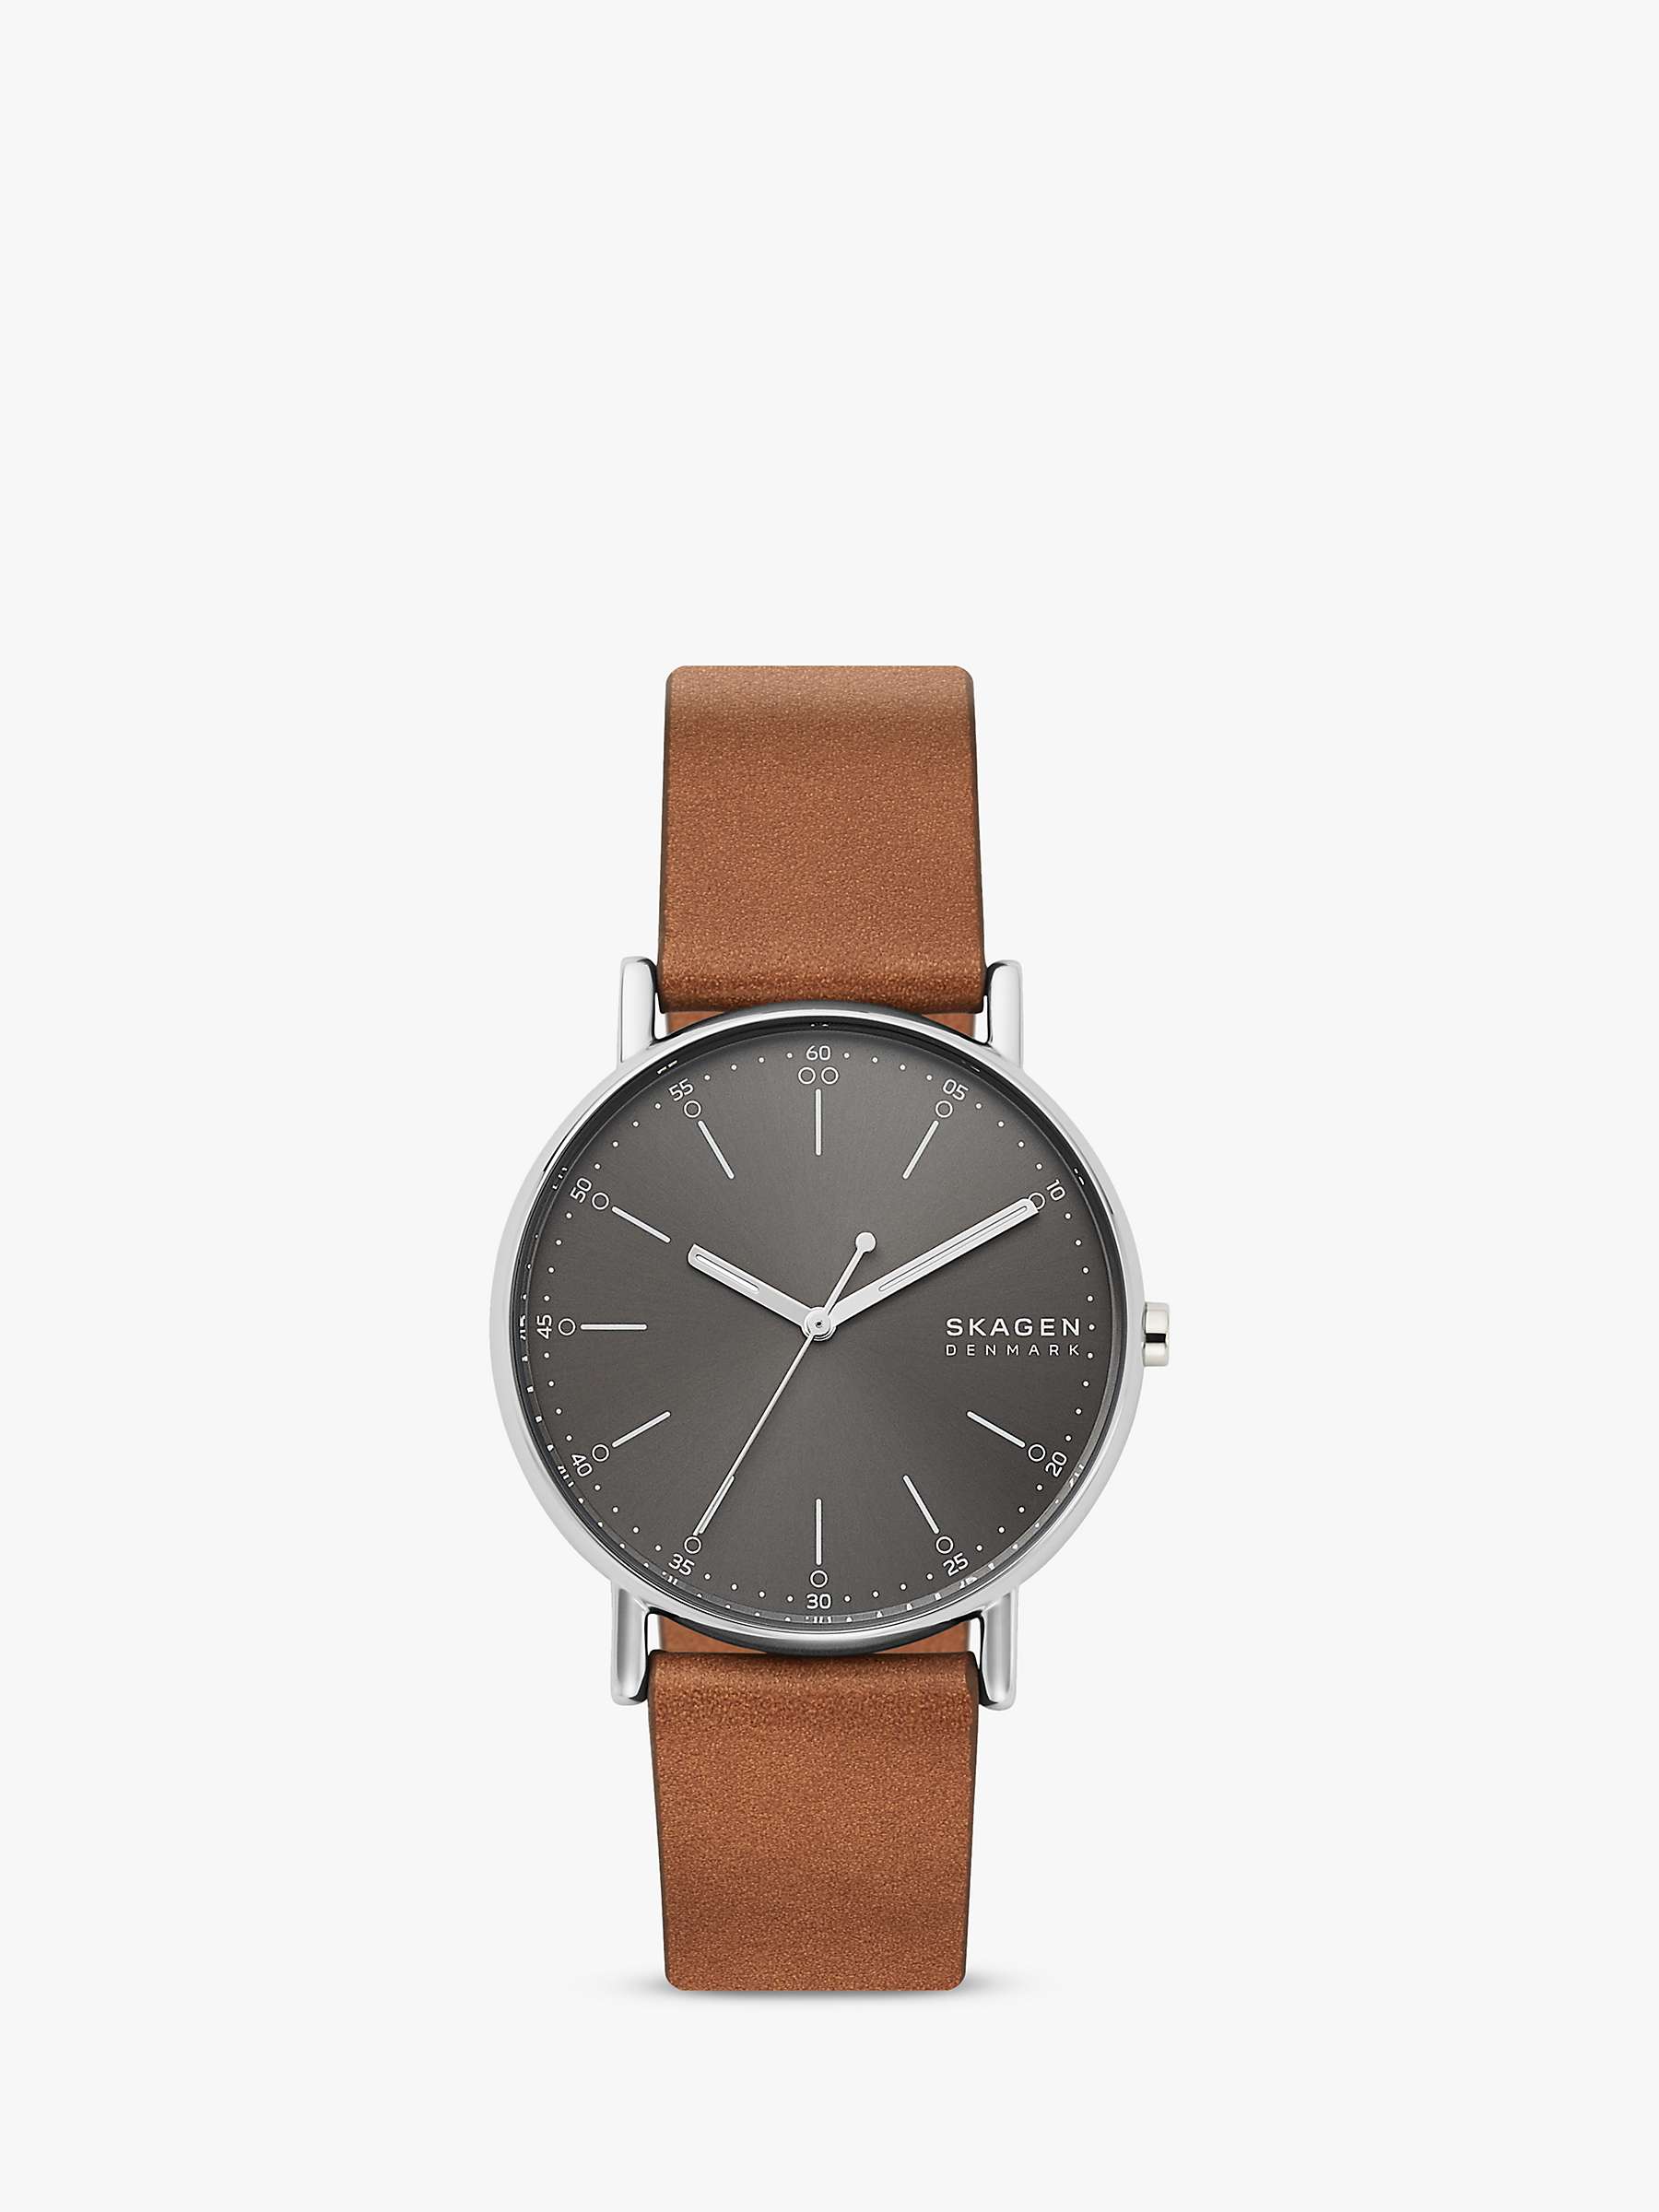 Buy Skagen Men's Signatur Leather Strap Watch Online at johnlewis.com